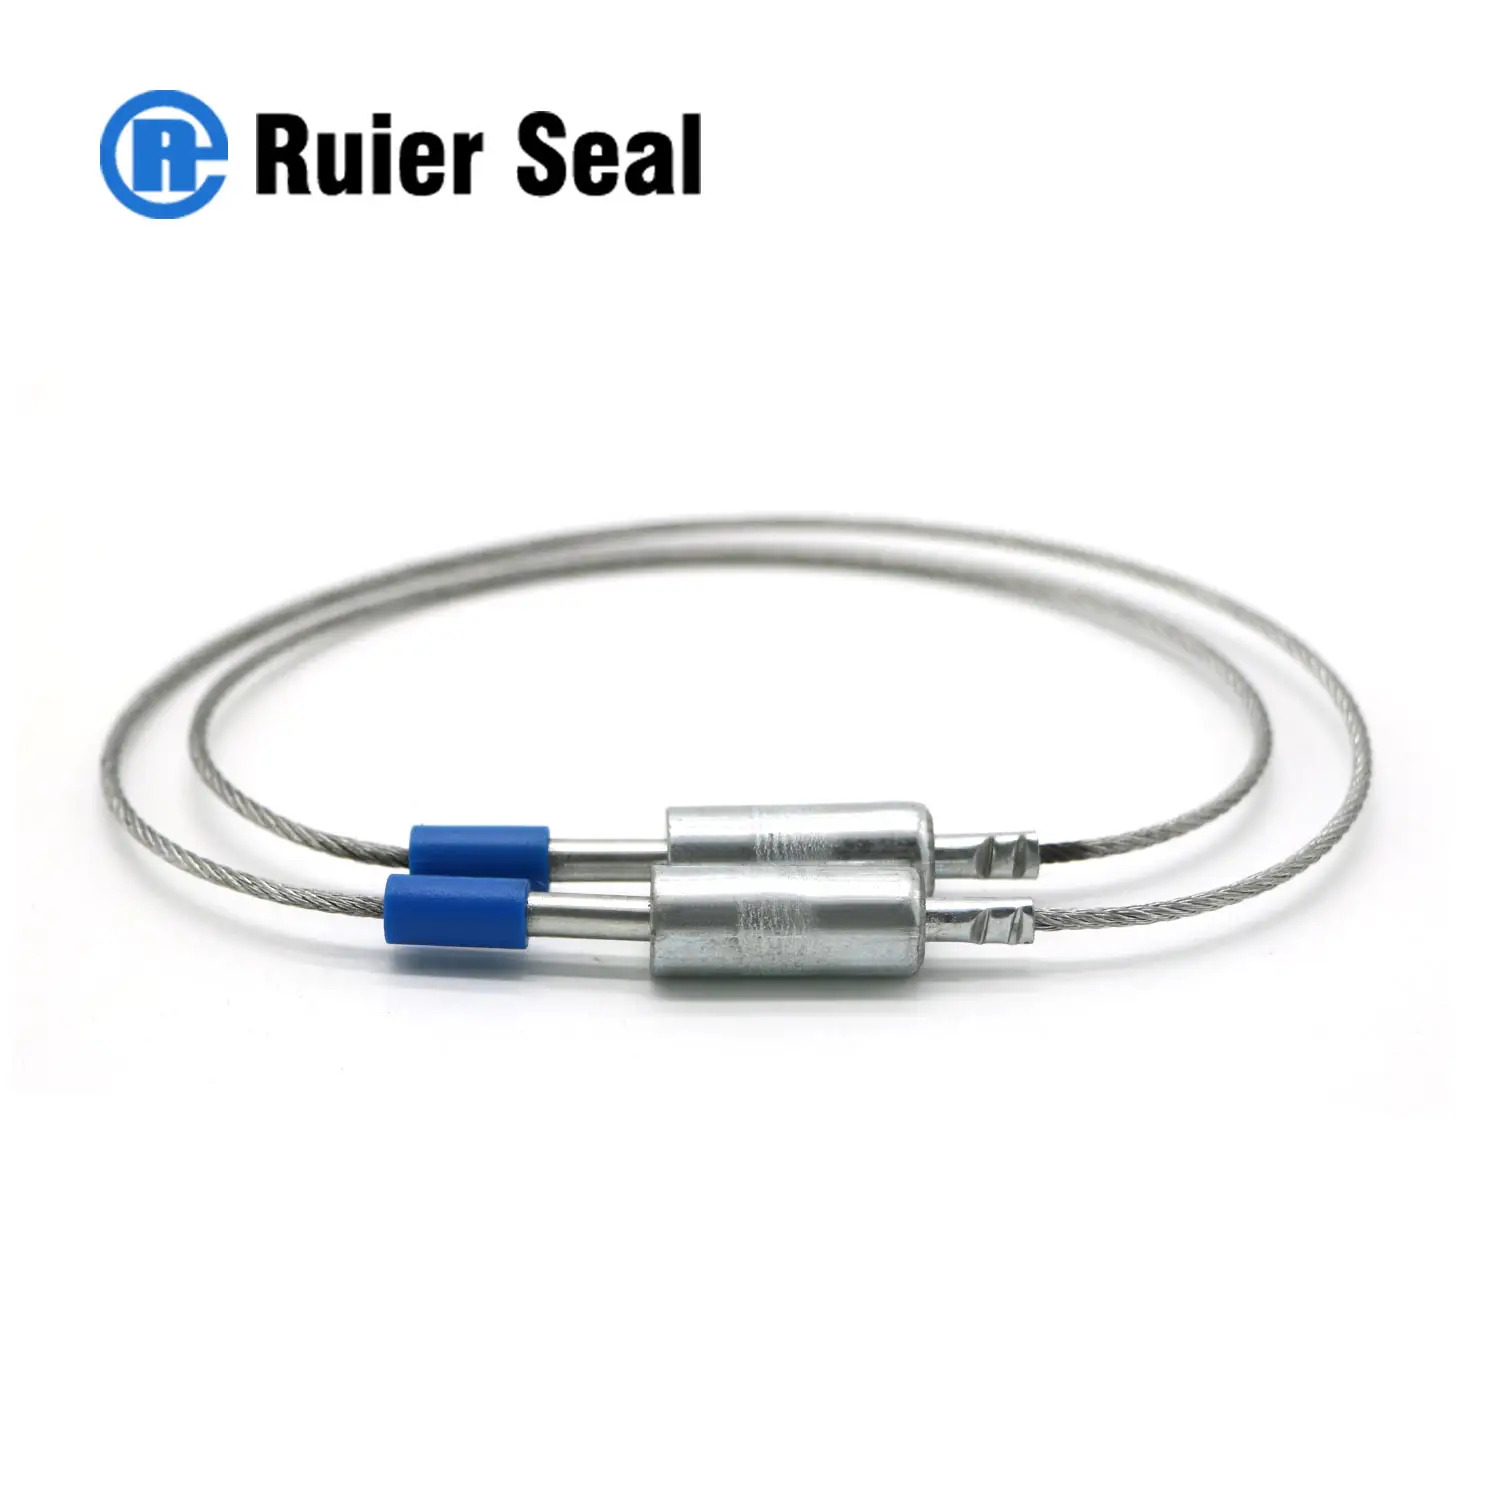 REC109 conteneur serrure câble joint fournisseurs conteneur joint câble 95 cm inviolable câble joint serrure